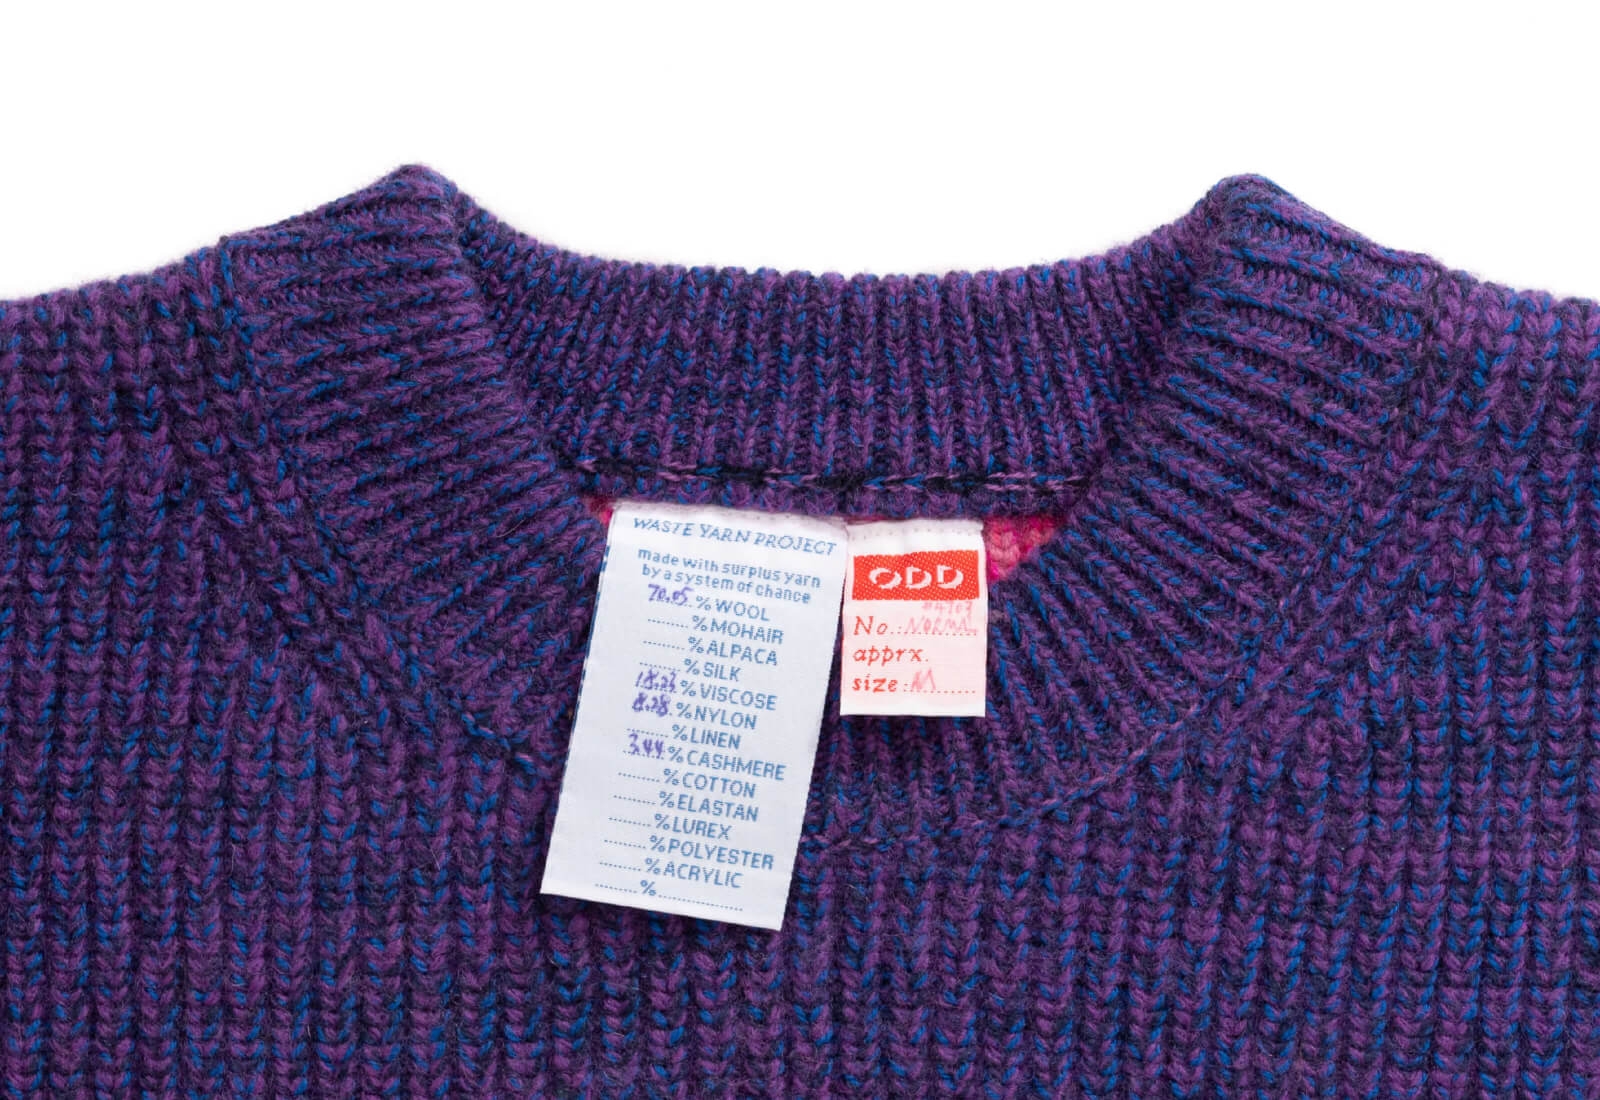 ODDS Sweater material closeup